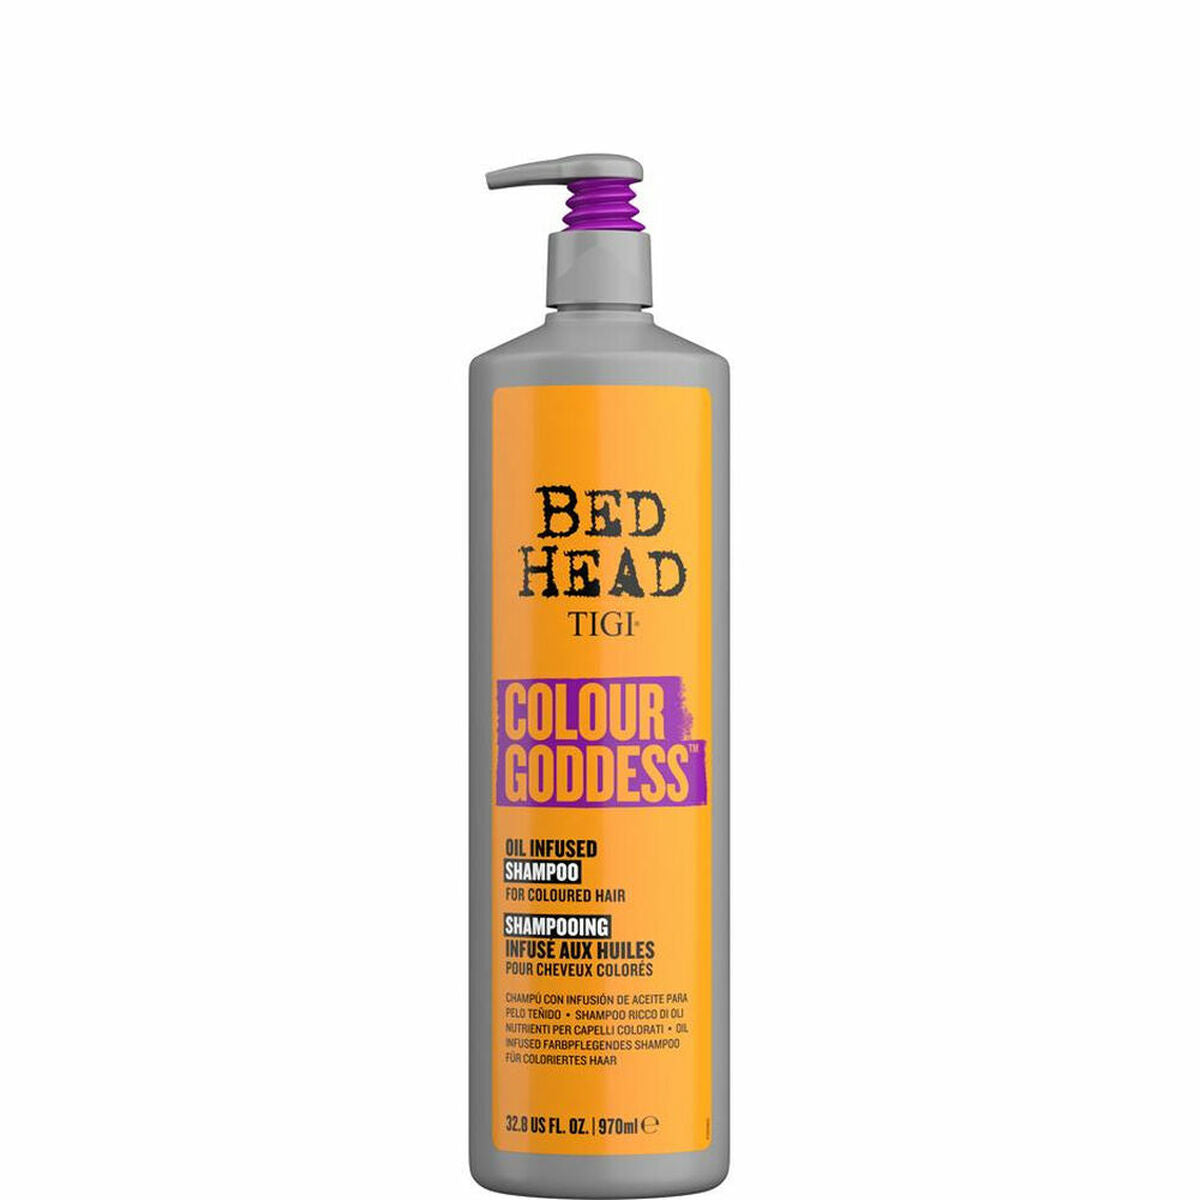 Shampoo for Coloured Hair Be Head Tigi Colour Goddness (970 ml)